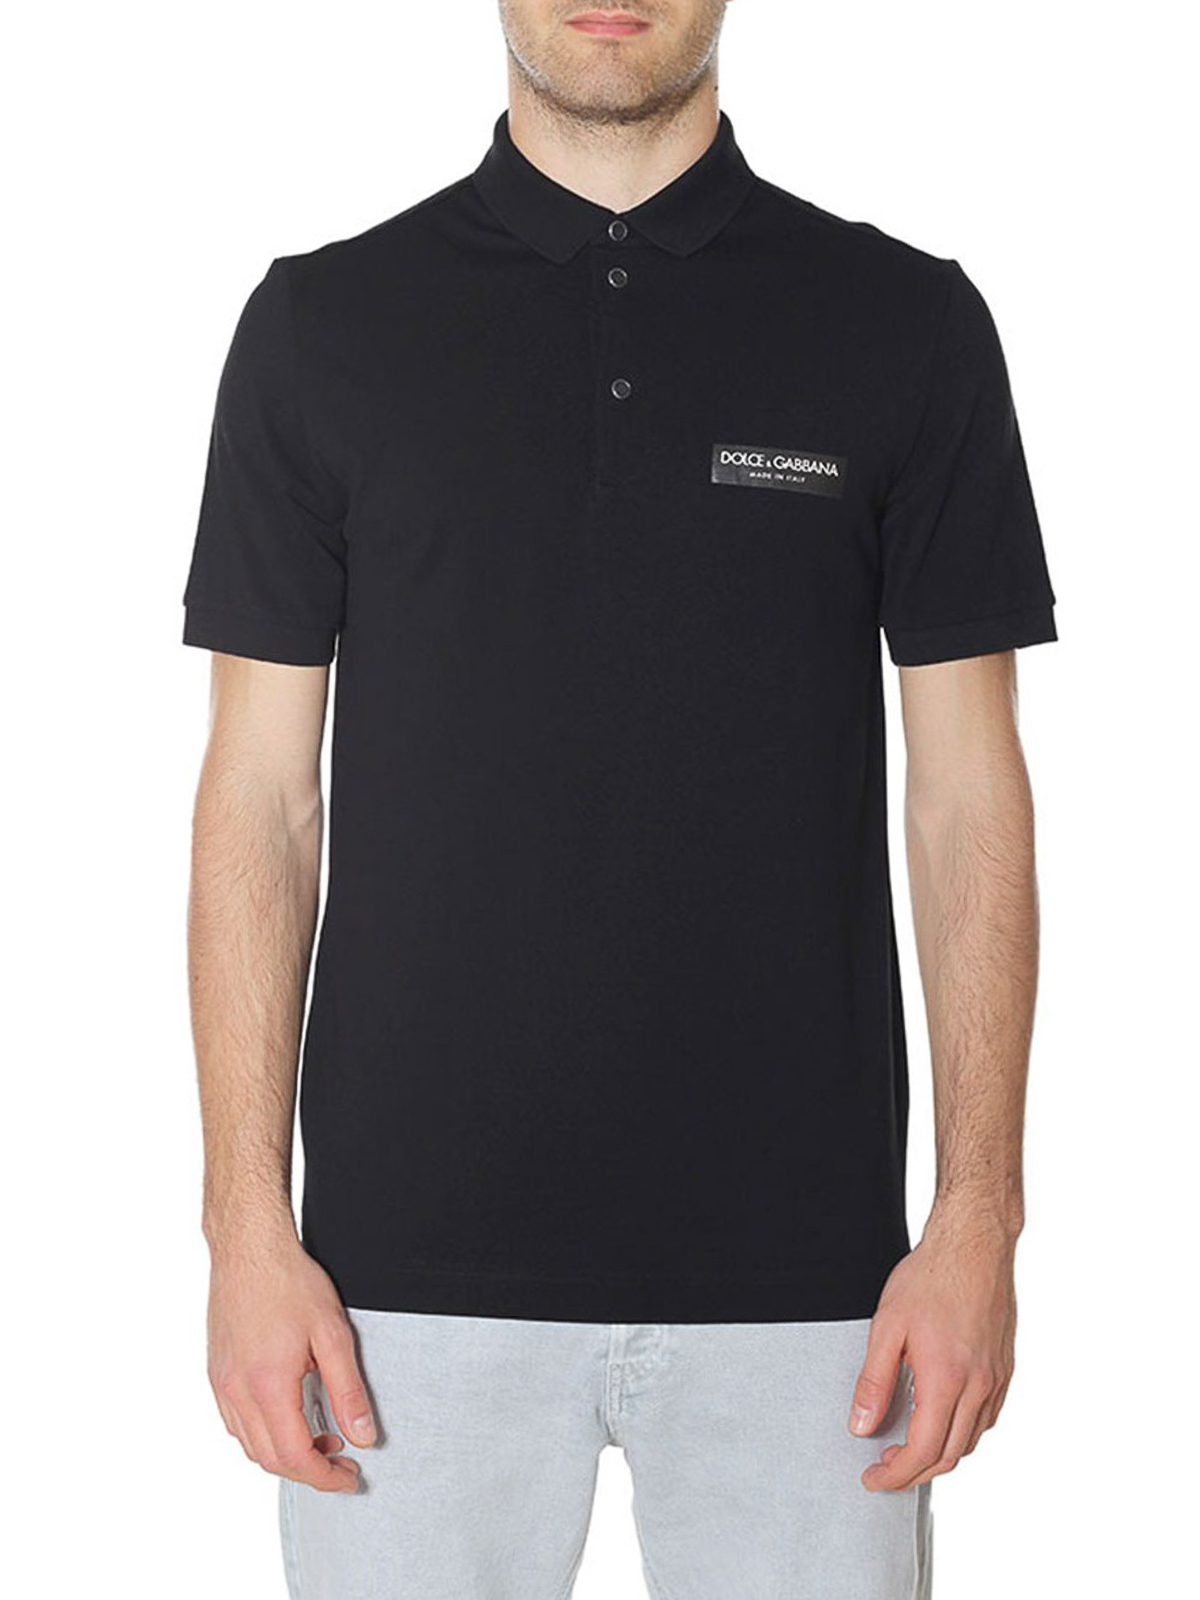 Polo shirts Dolce & Gabbana - Black cotton pique polo shirt -  G8IO2TFU7ENN0000